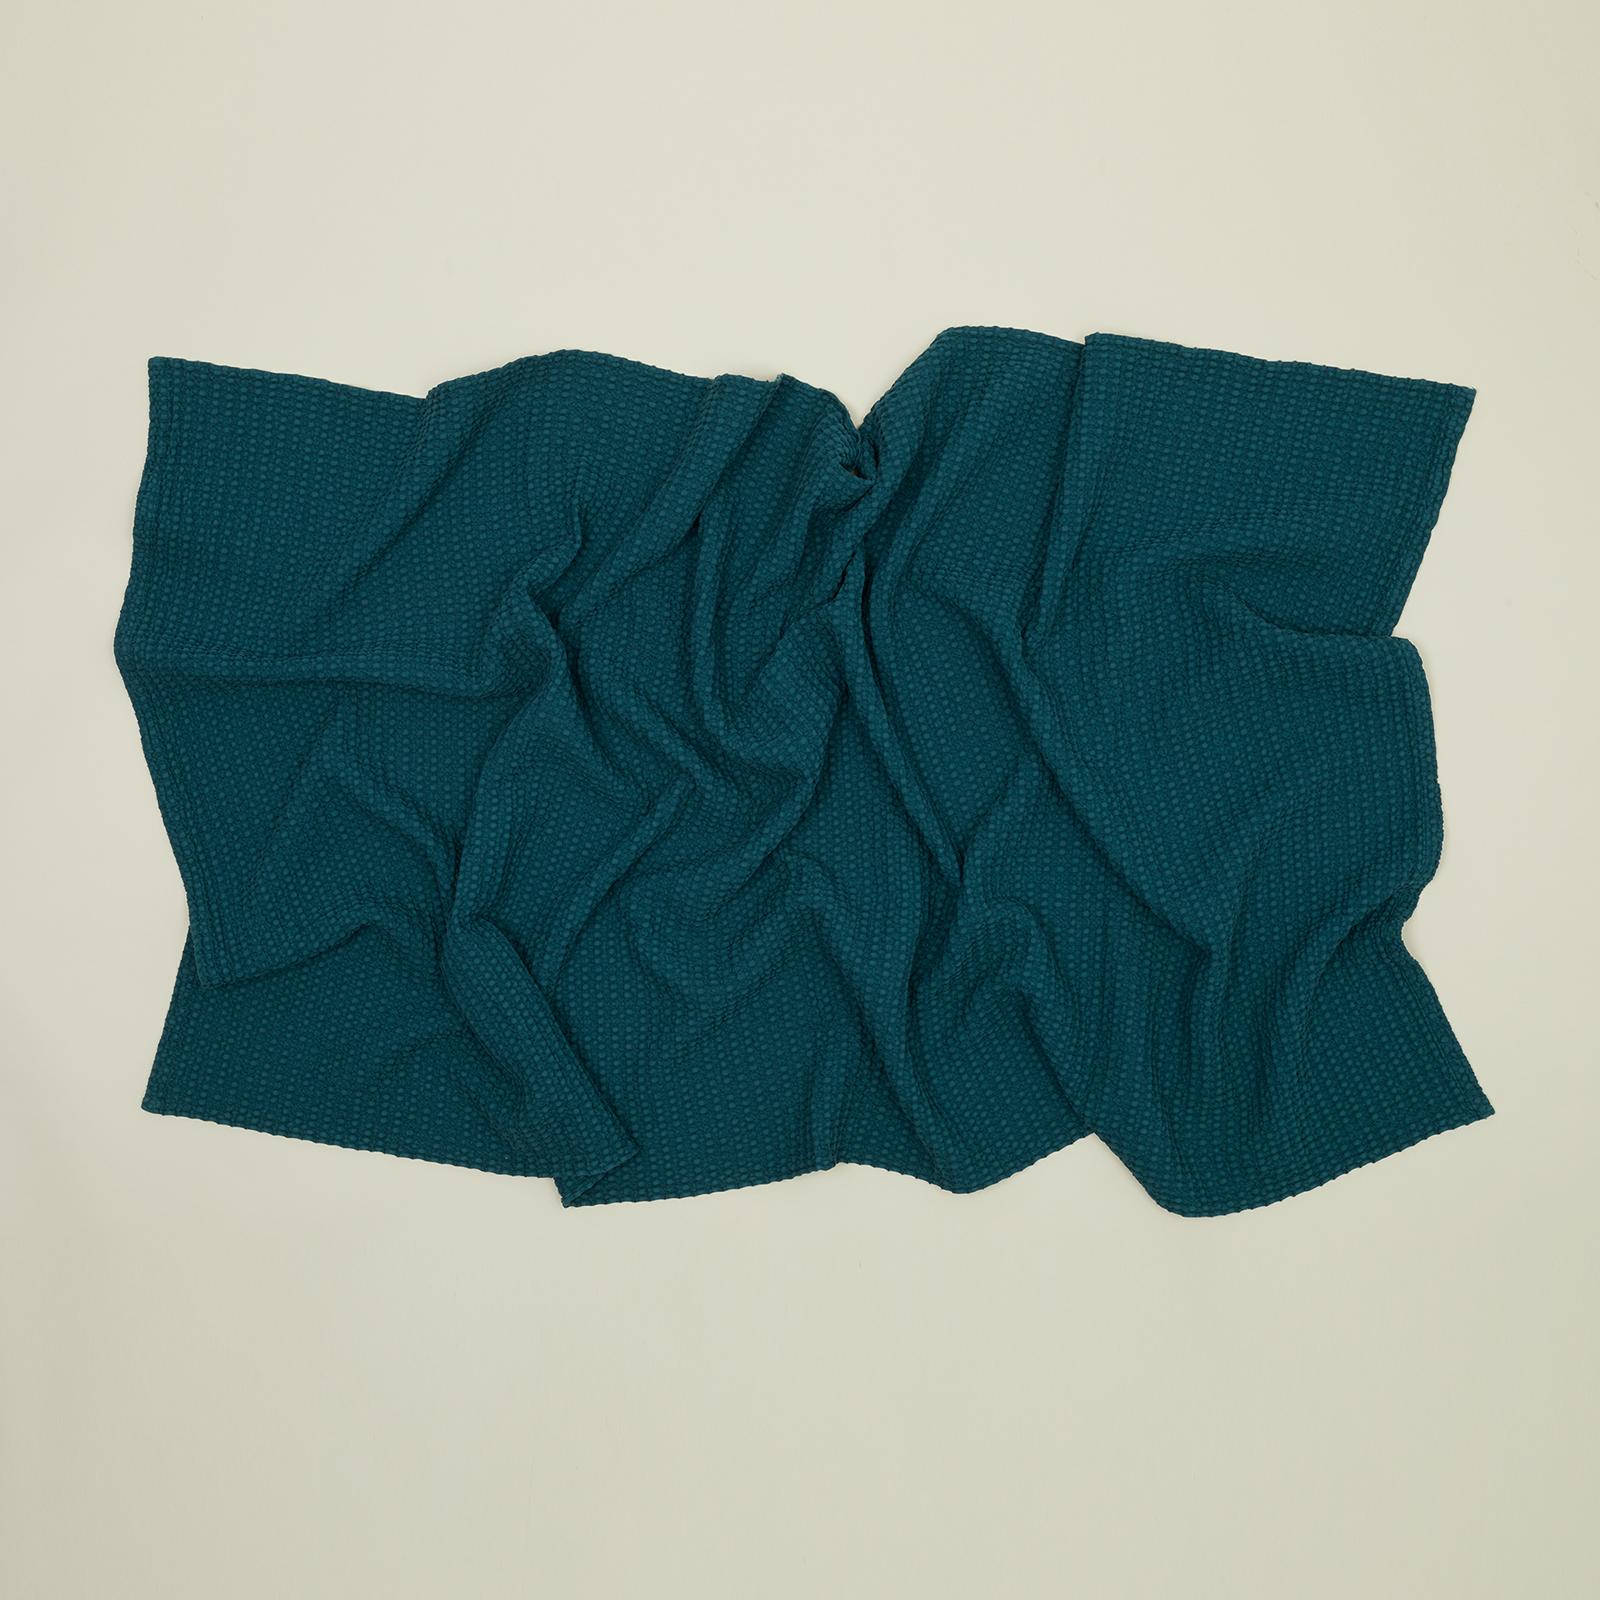 Hawkins New York Essential Yarn Dyed Dish Towel Set | Olive & Sage